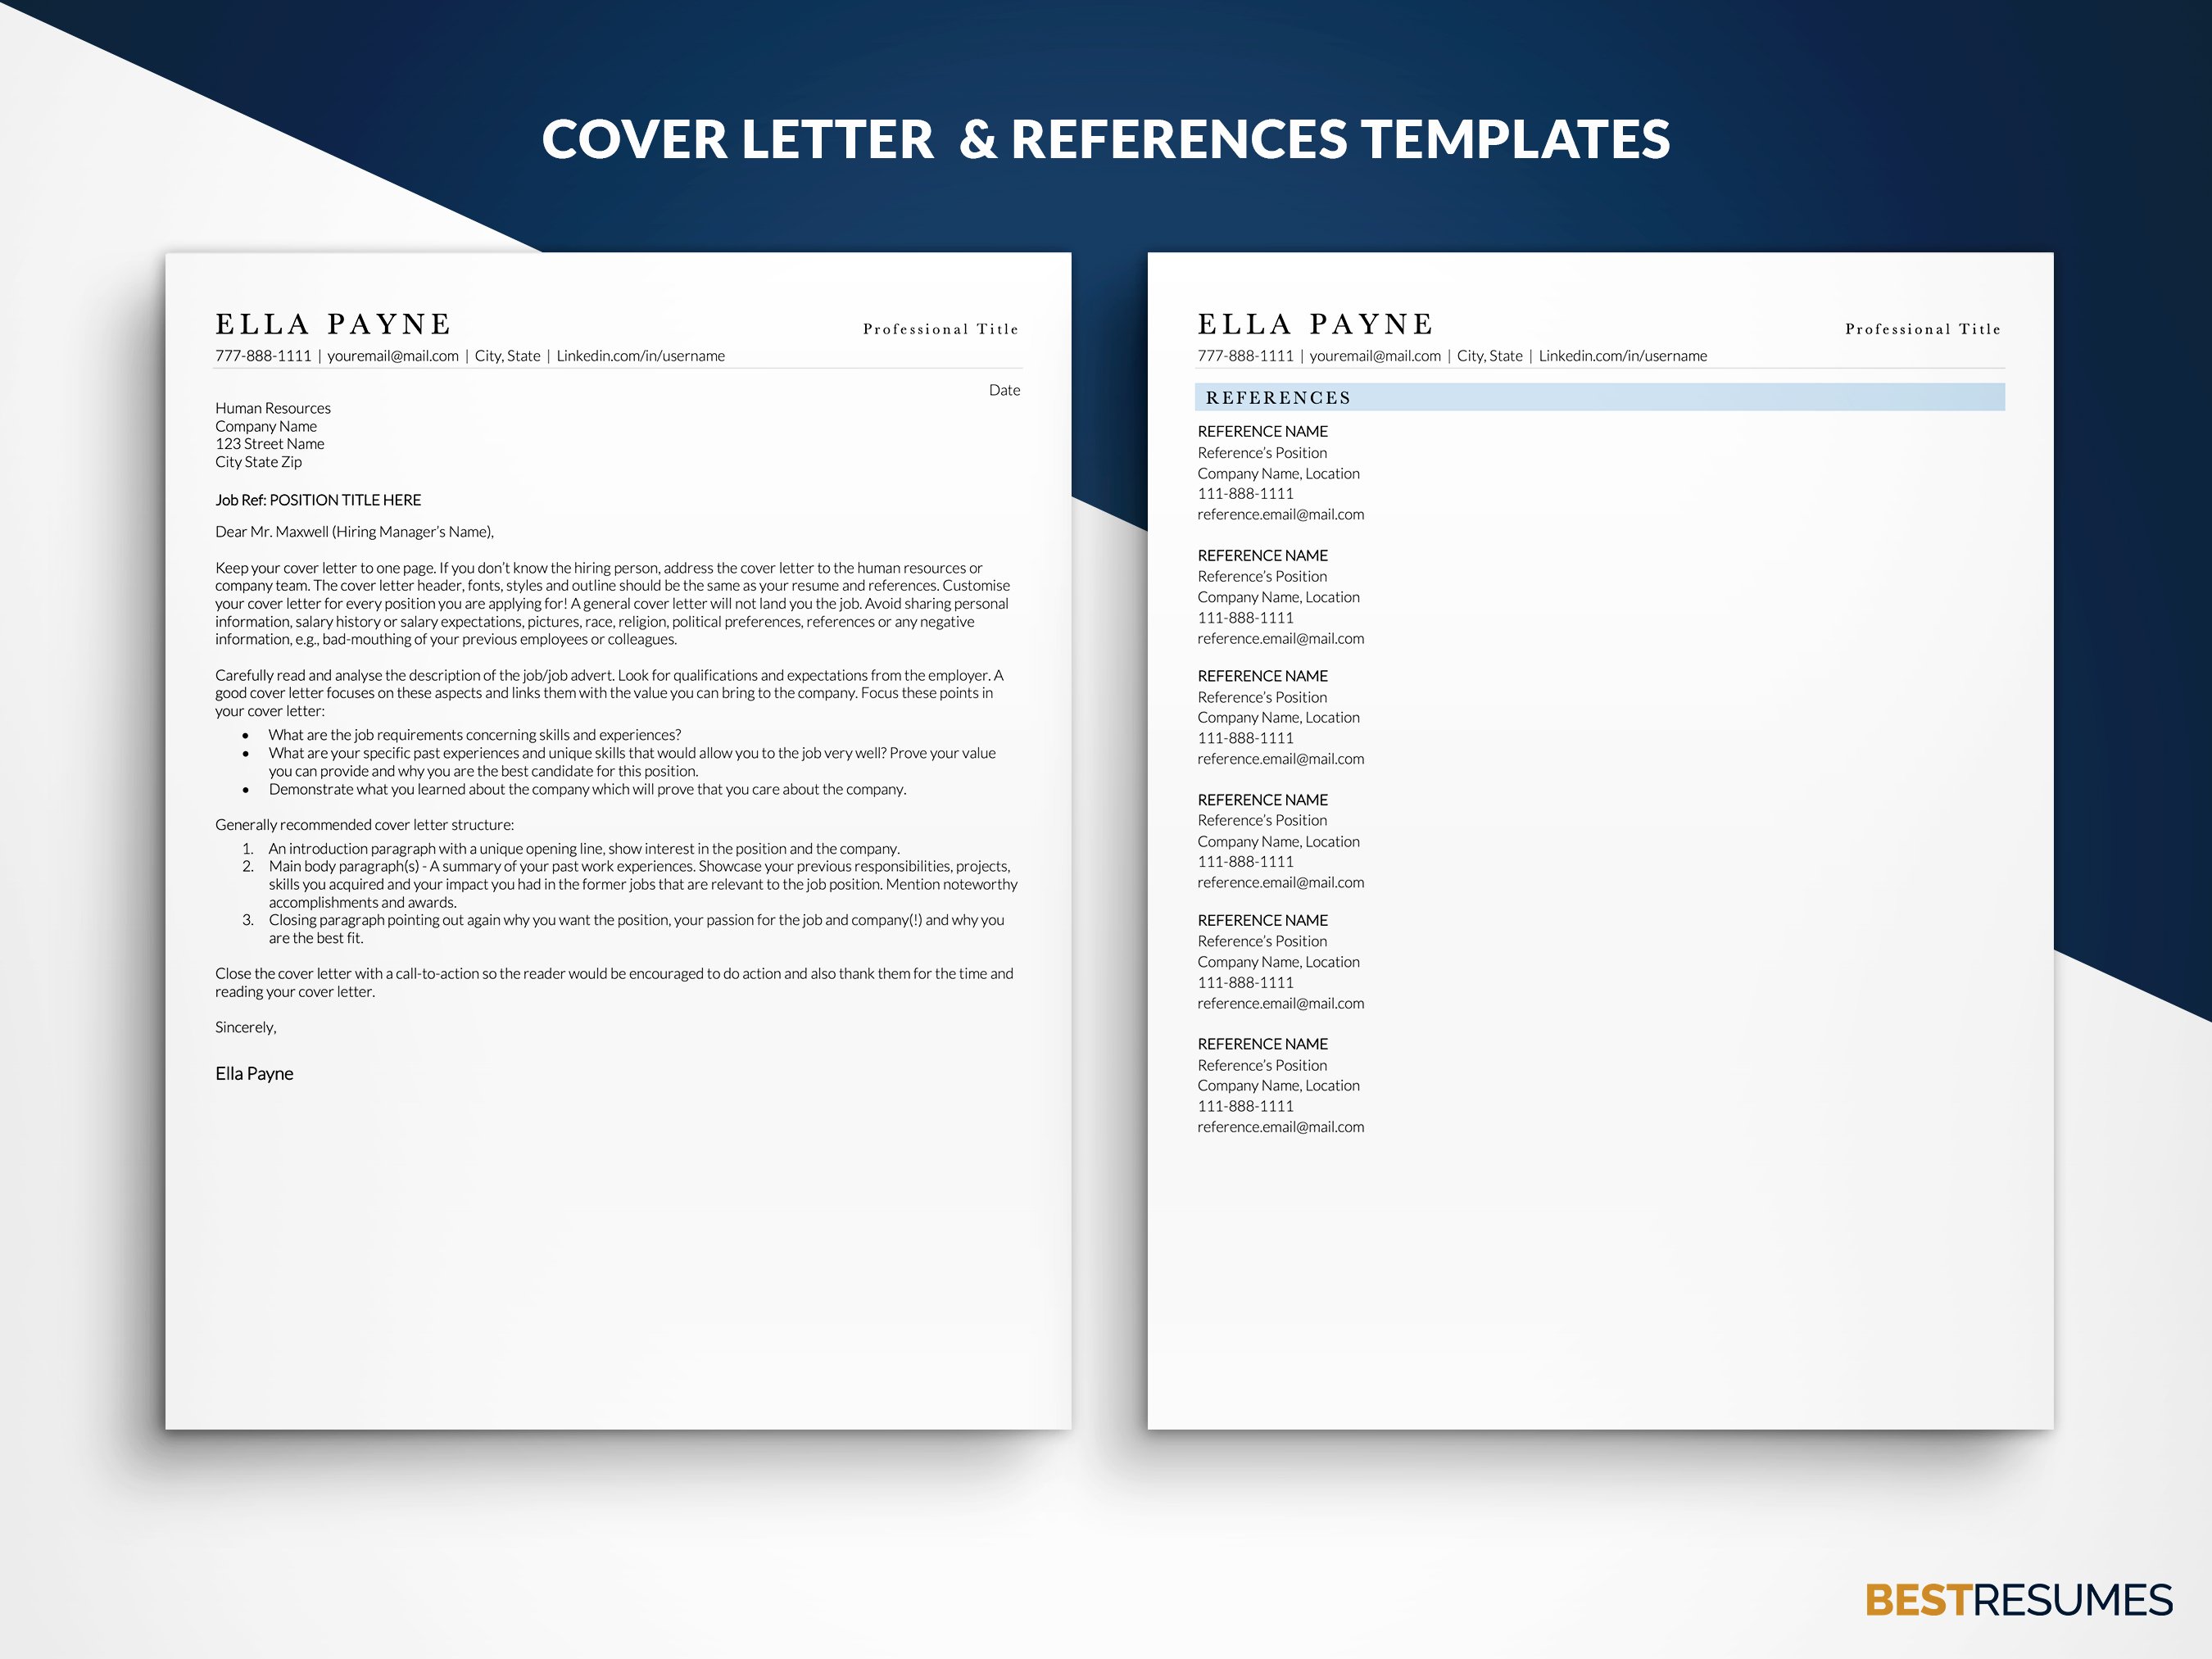 ats optimized resume template cover letter ella payne 539